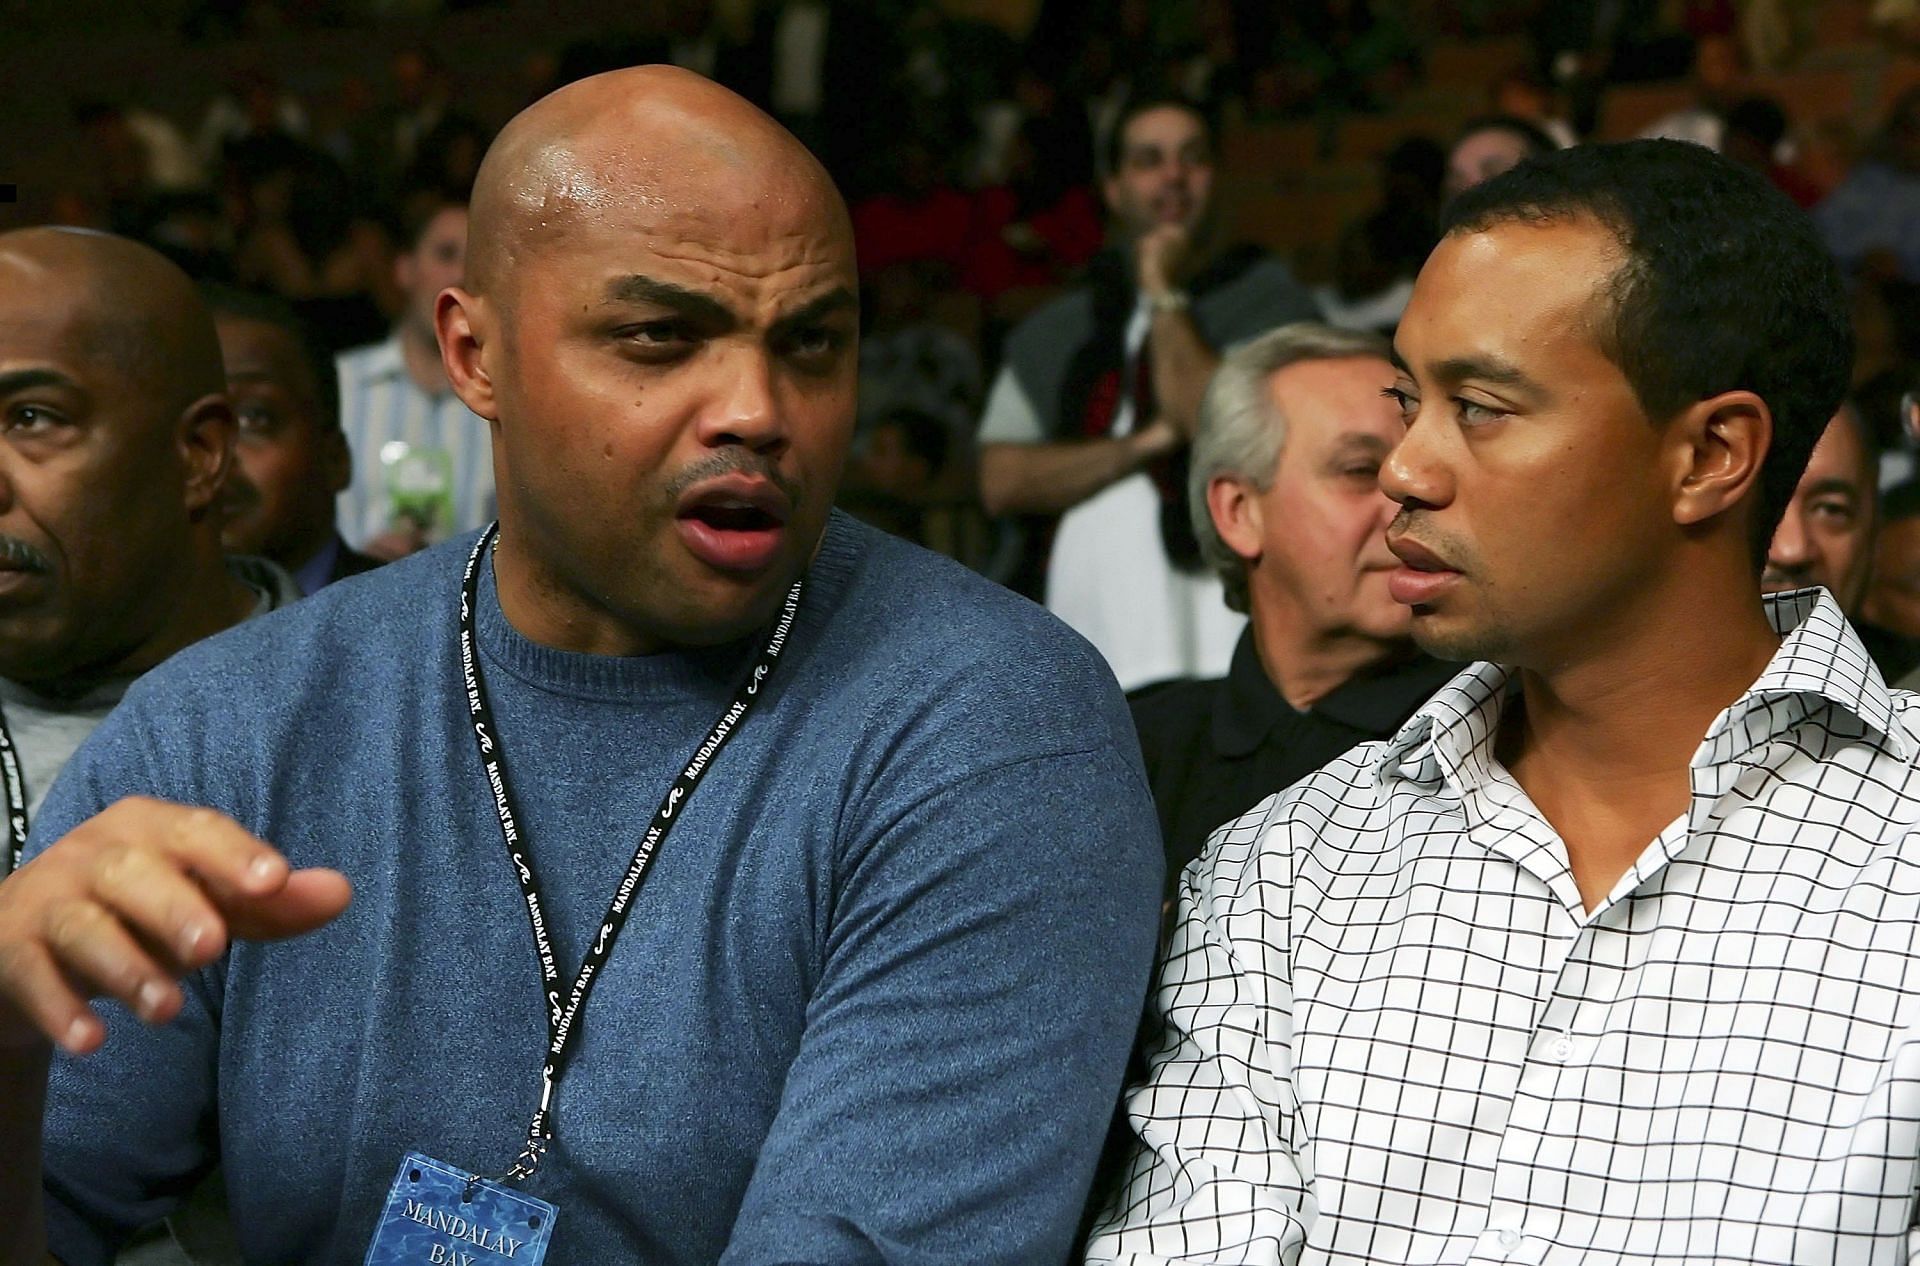 Charles Barkley (left) and Tiger Woods at the Robert Guerrero vs Orlando Salido fight